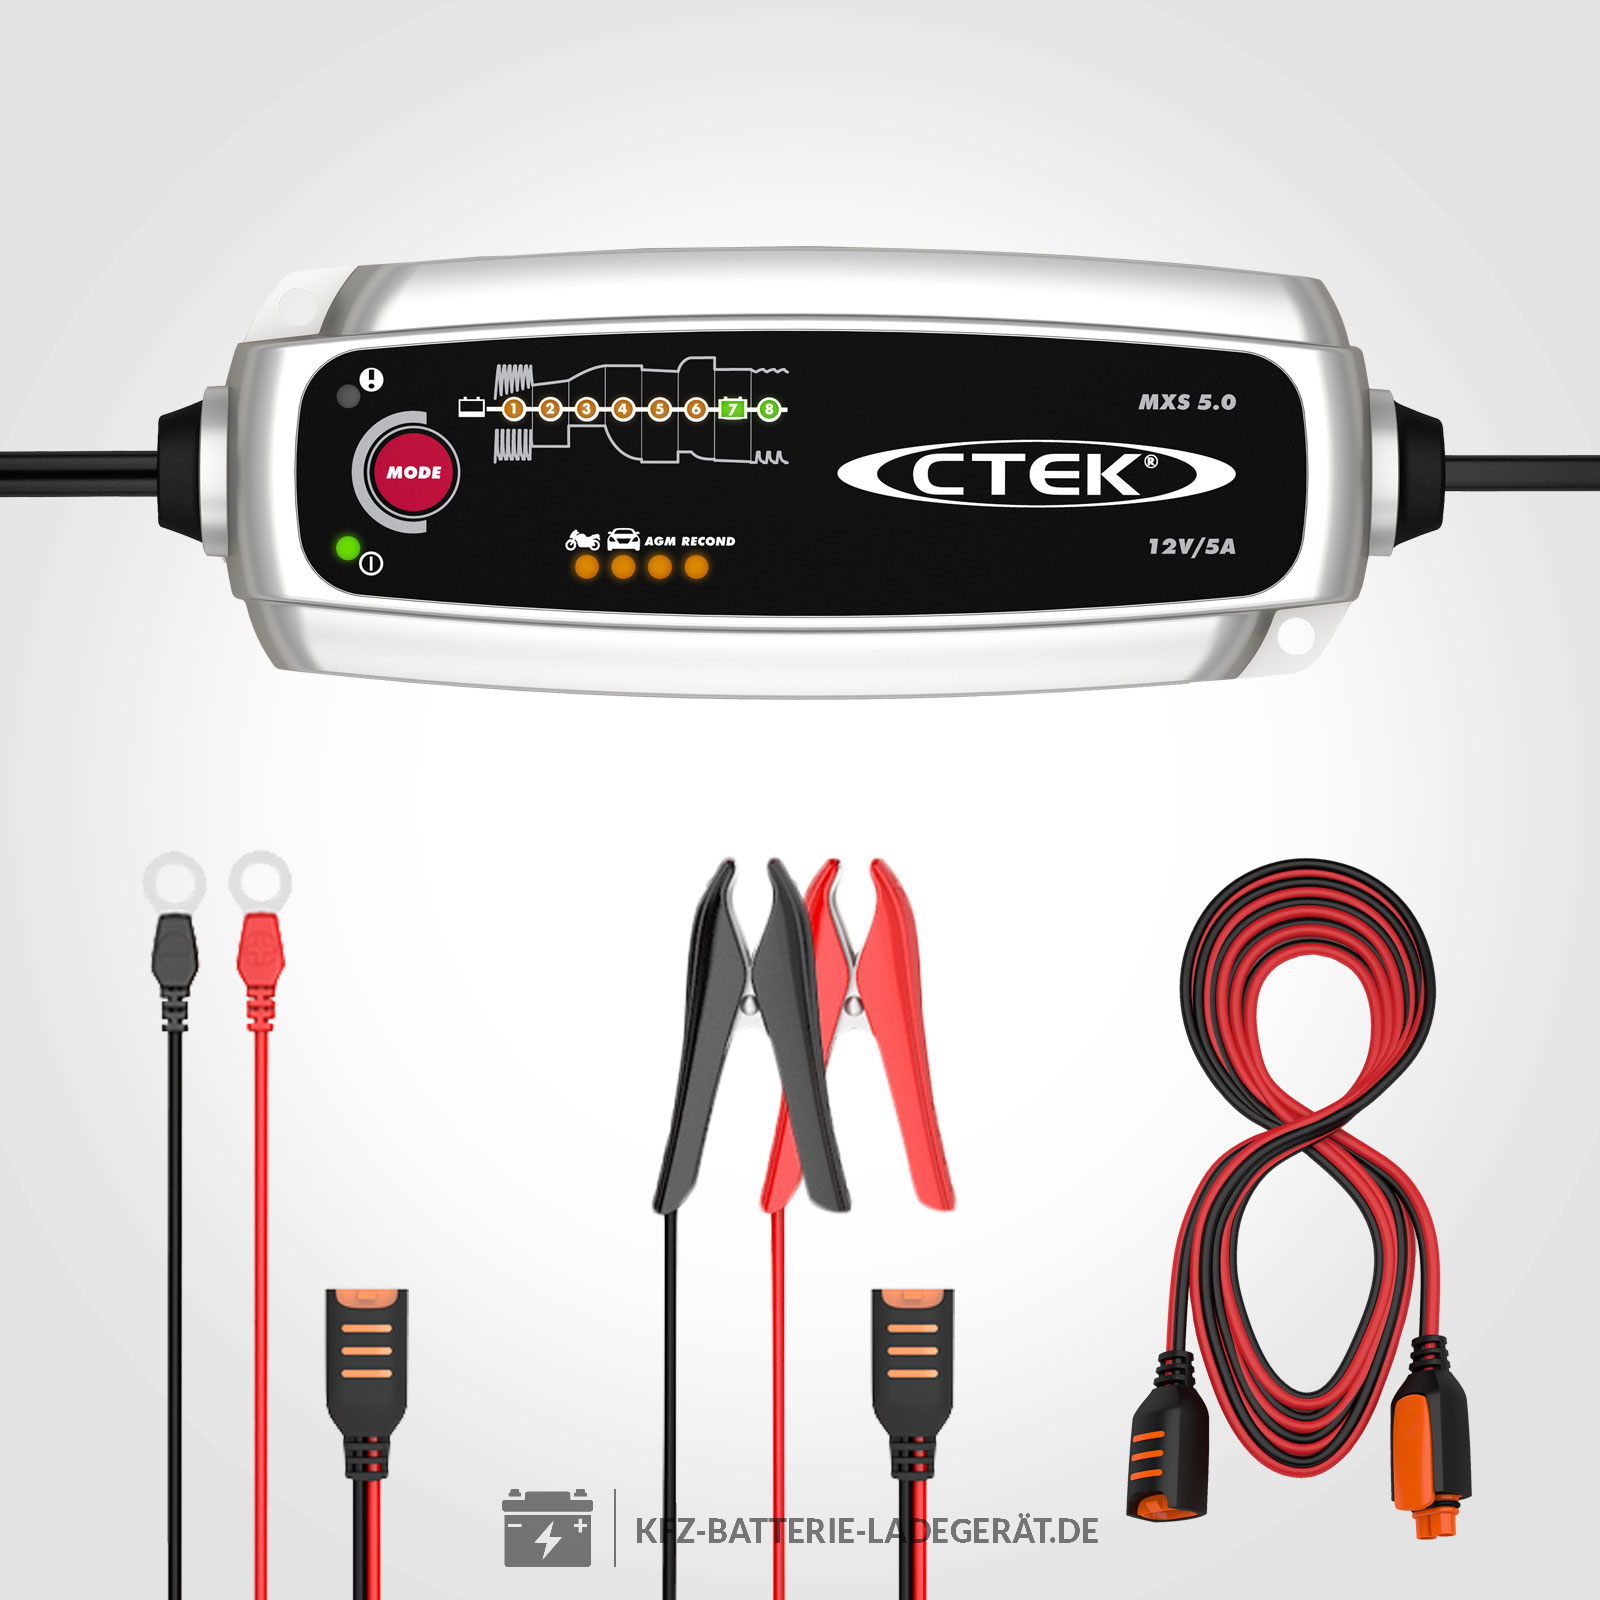 https://www.kfz-batterie-ladegeraet.de/media/image/product/11248/lg/ctek-sparset-ladegeraet-mxs-5-0-adapter-ladekabel-verlaengerung.jpg